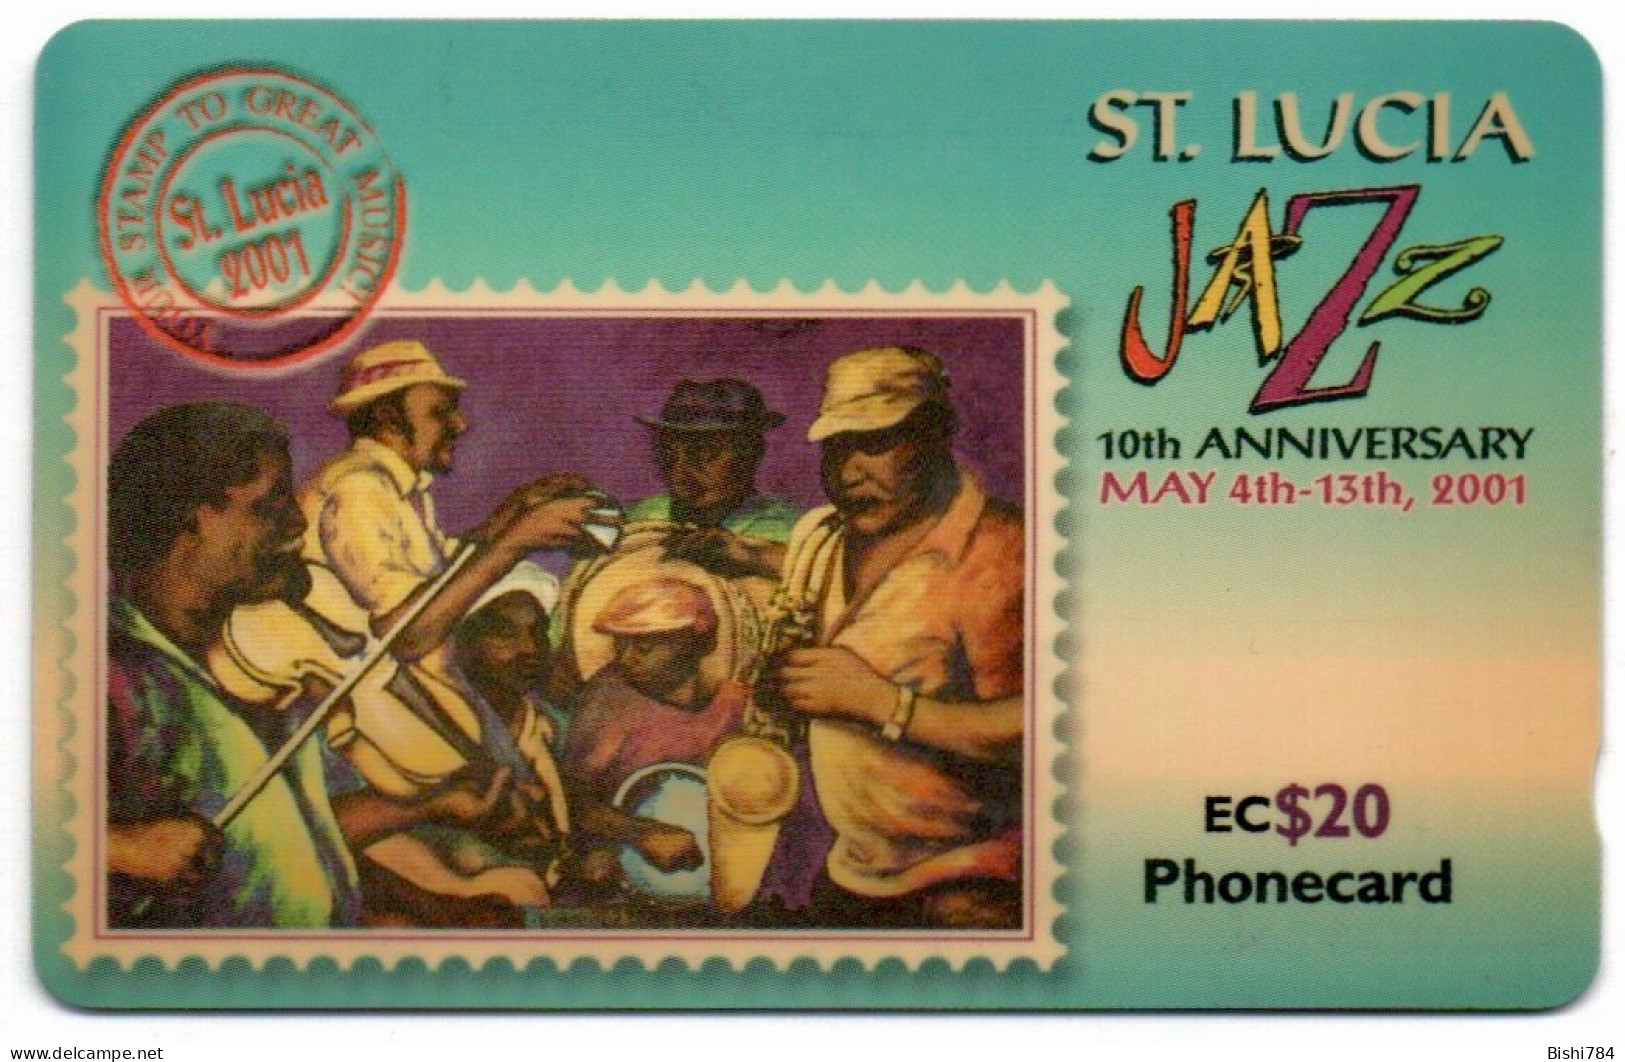 St. Lucia - Jazz Festival 2001 - 337CSLJ - Sainte Lucie